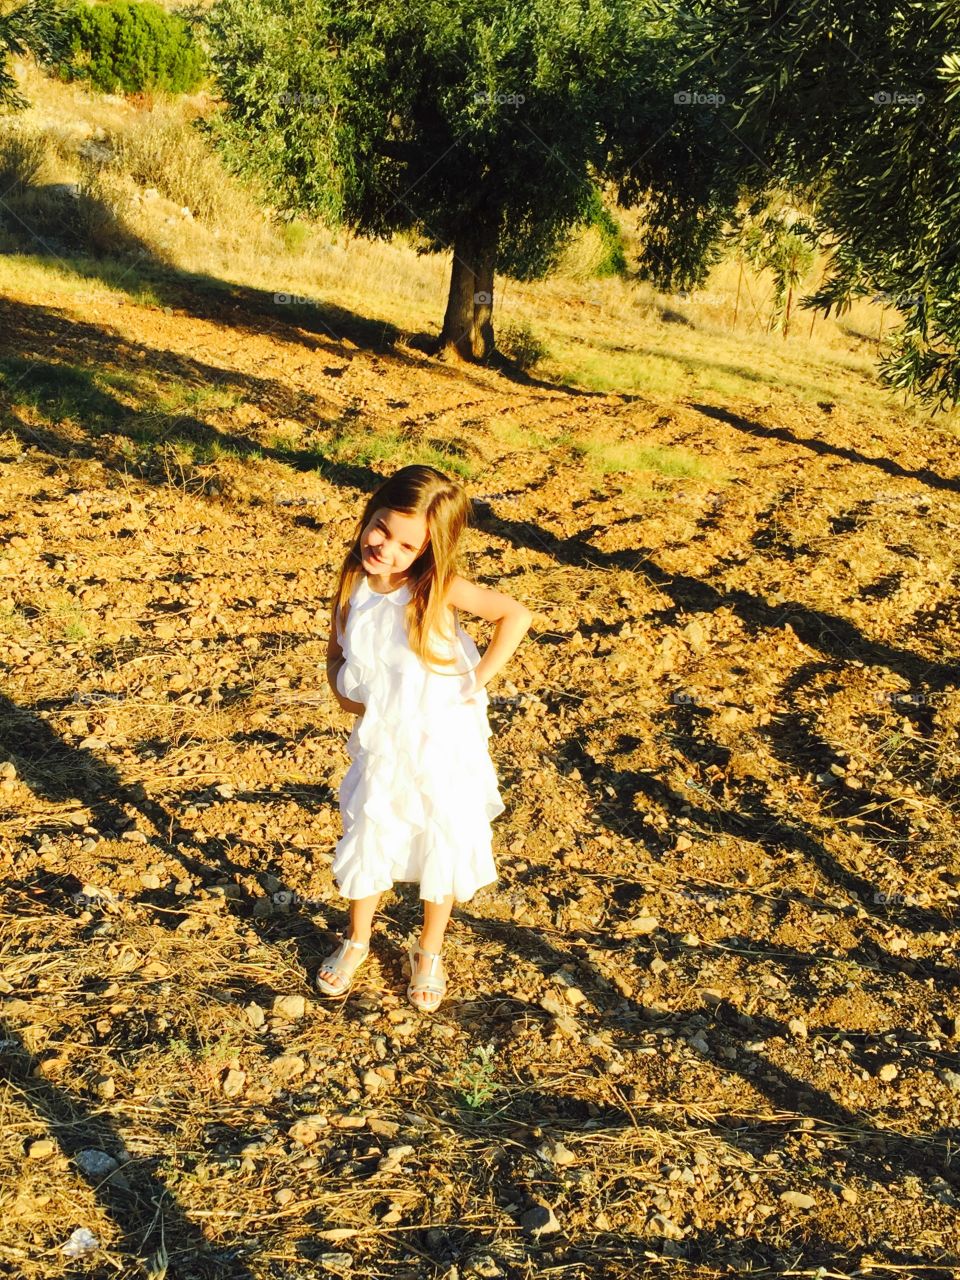 Cute girl standing in farm